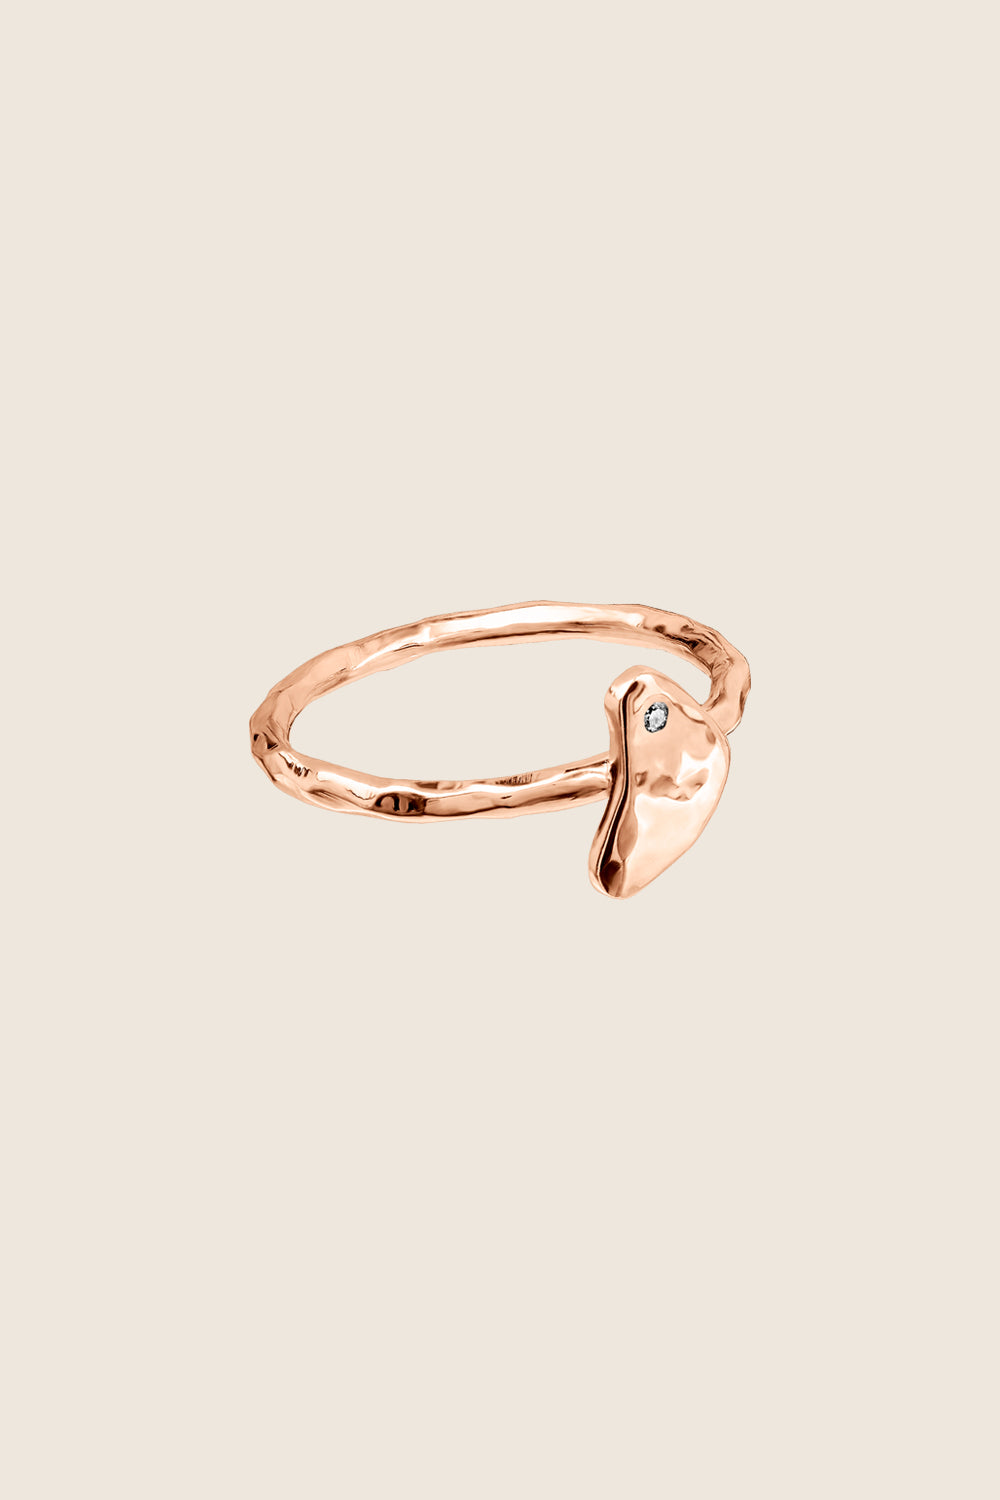 pierścionek różowe złoto 585 brylant JUGO ARDA biżuteria UMIAR nieregularna faktura